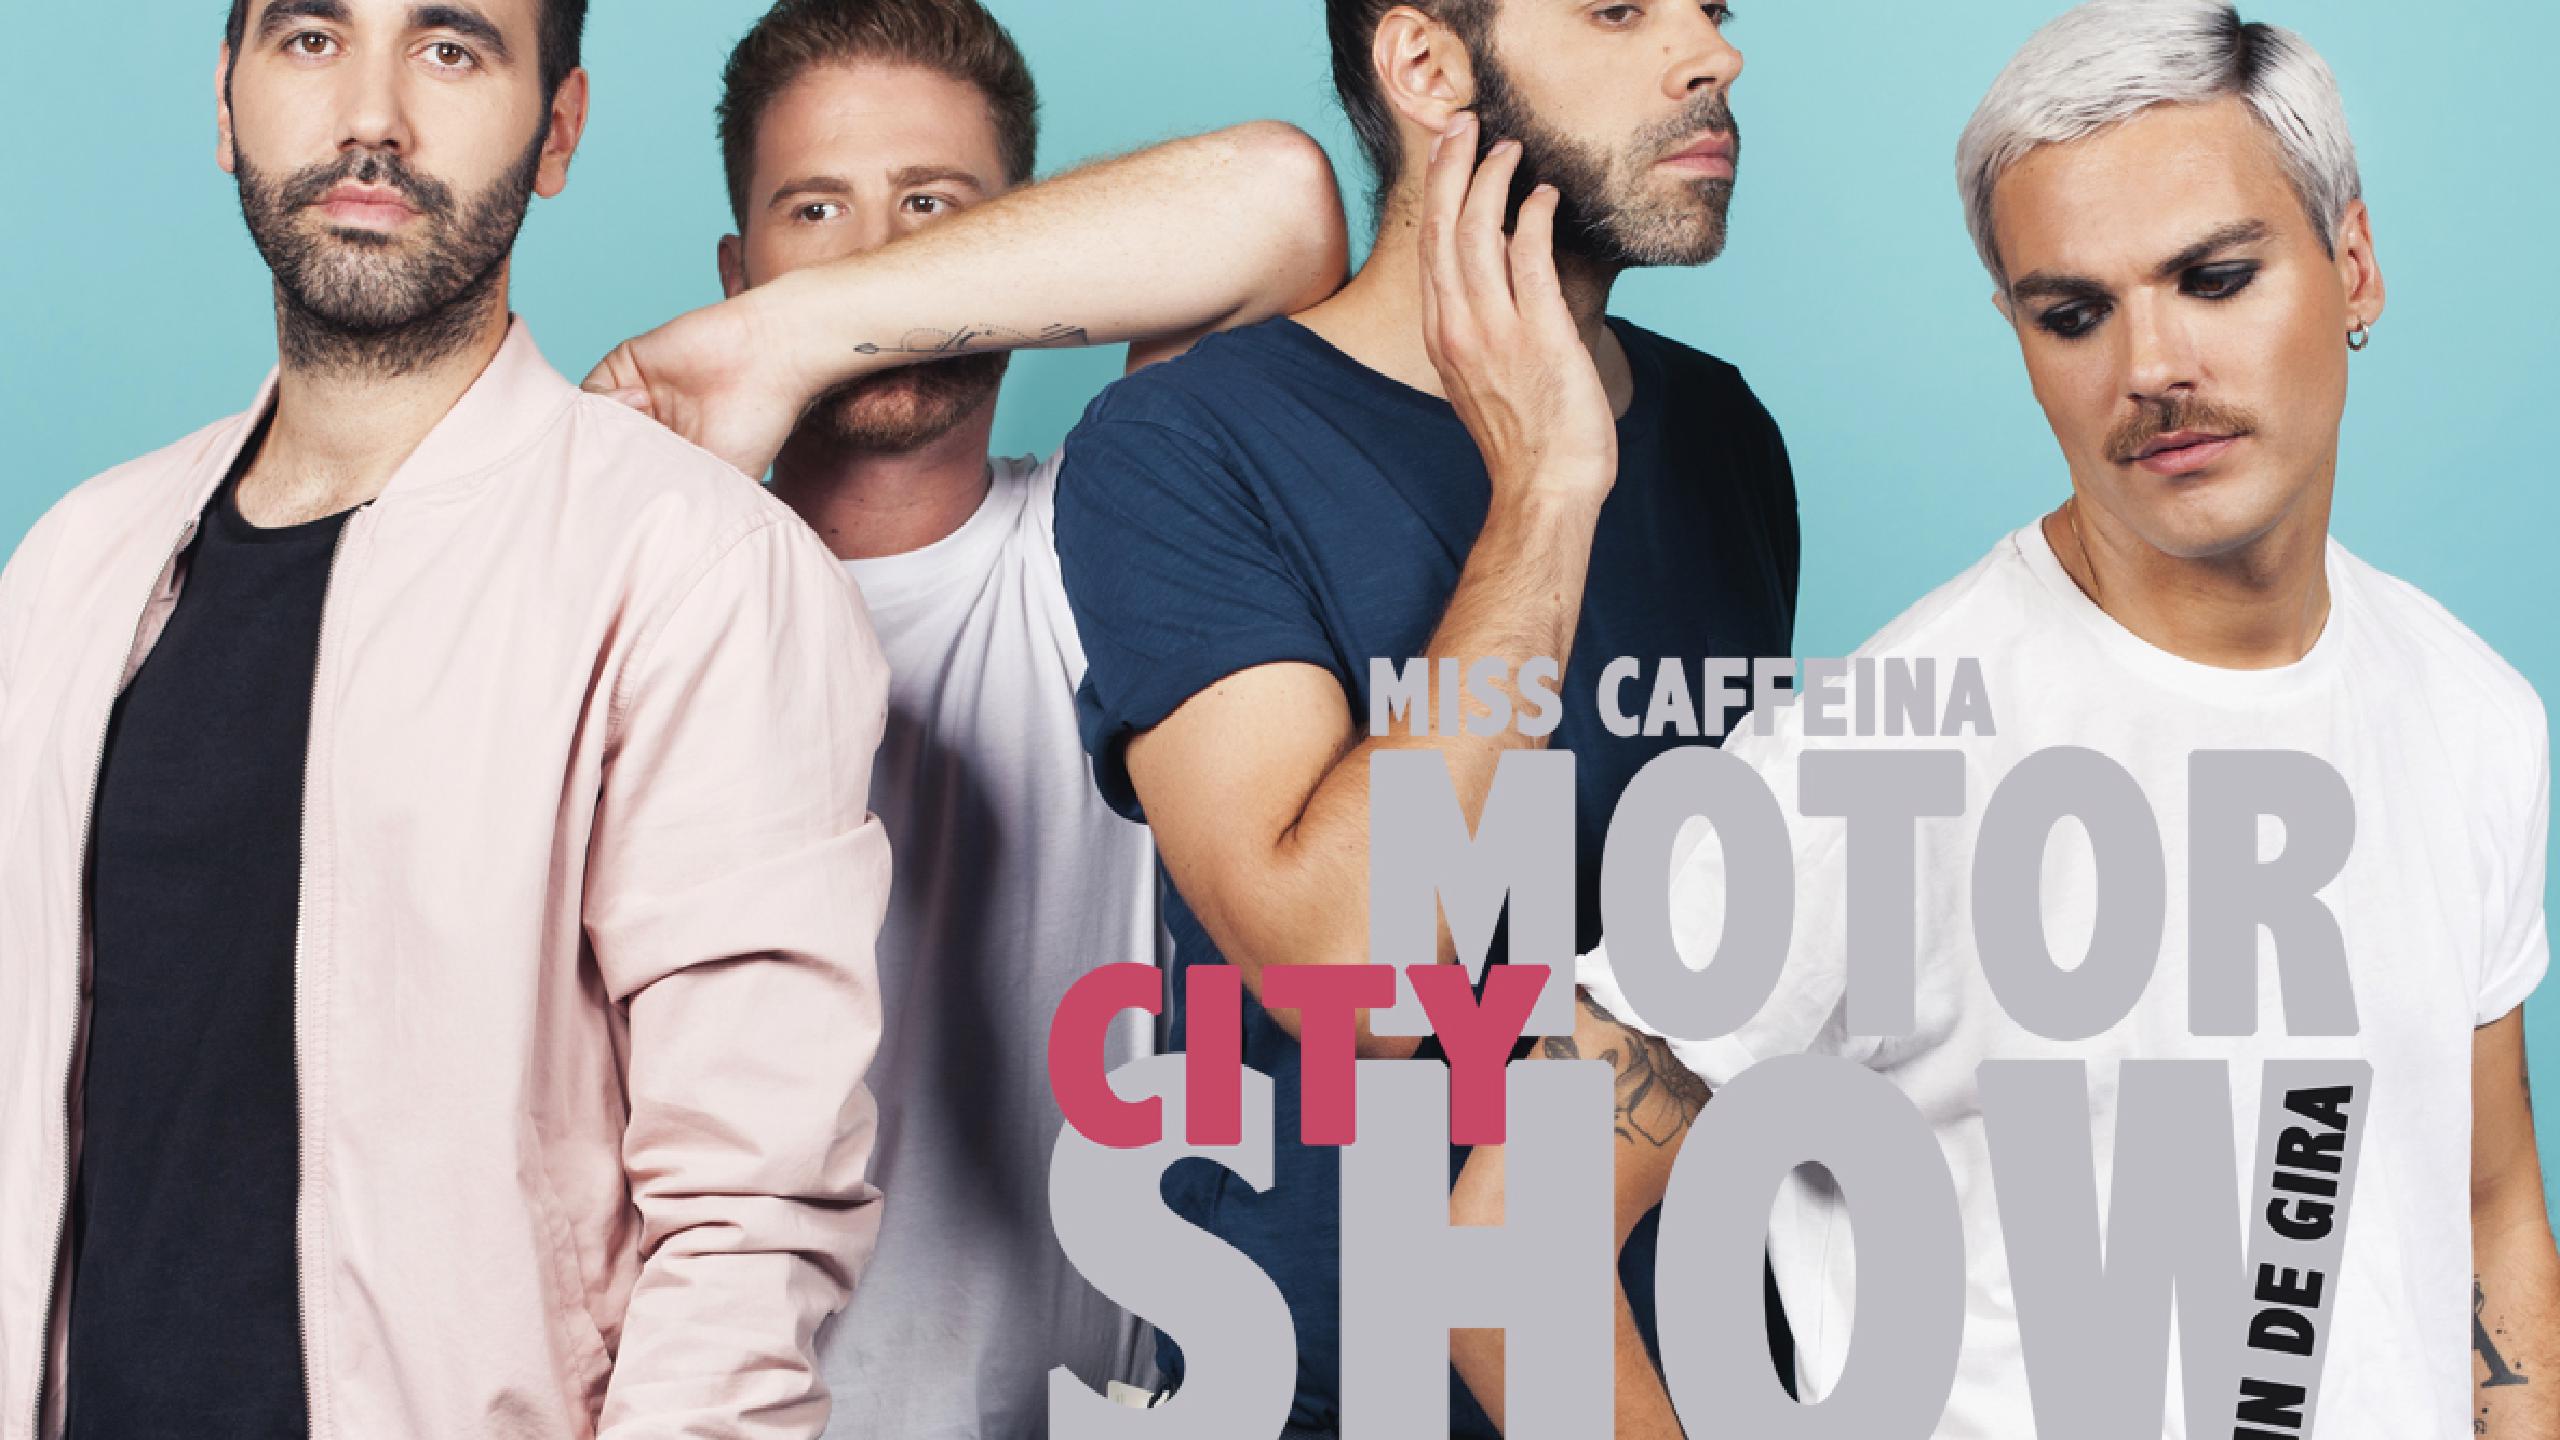 Fotografía promocional de Miss Caffeina En Madrid | Motor City Show (segunda fecha)